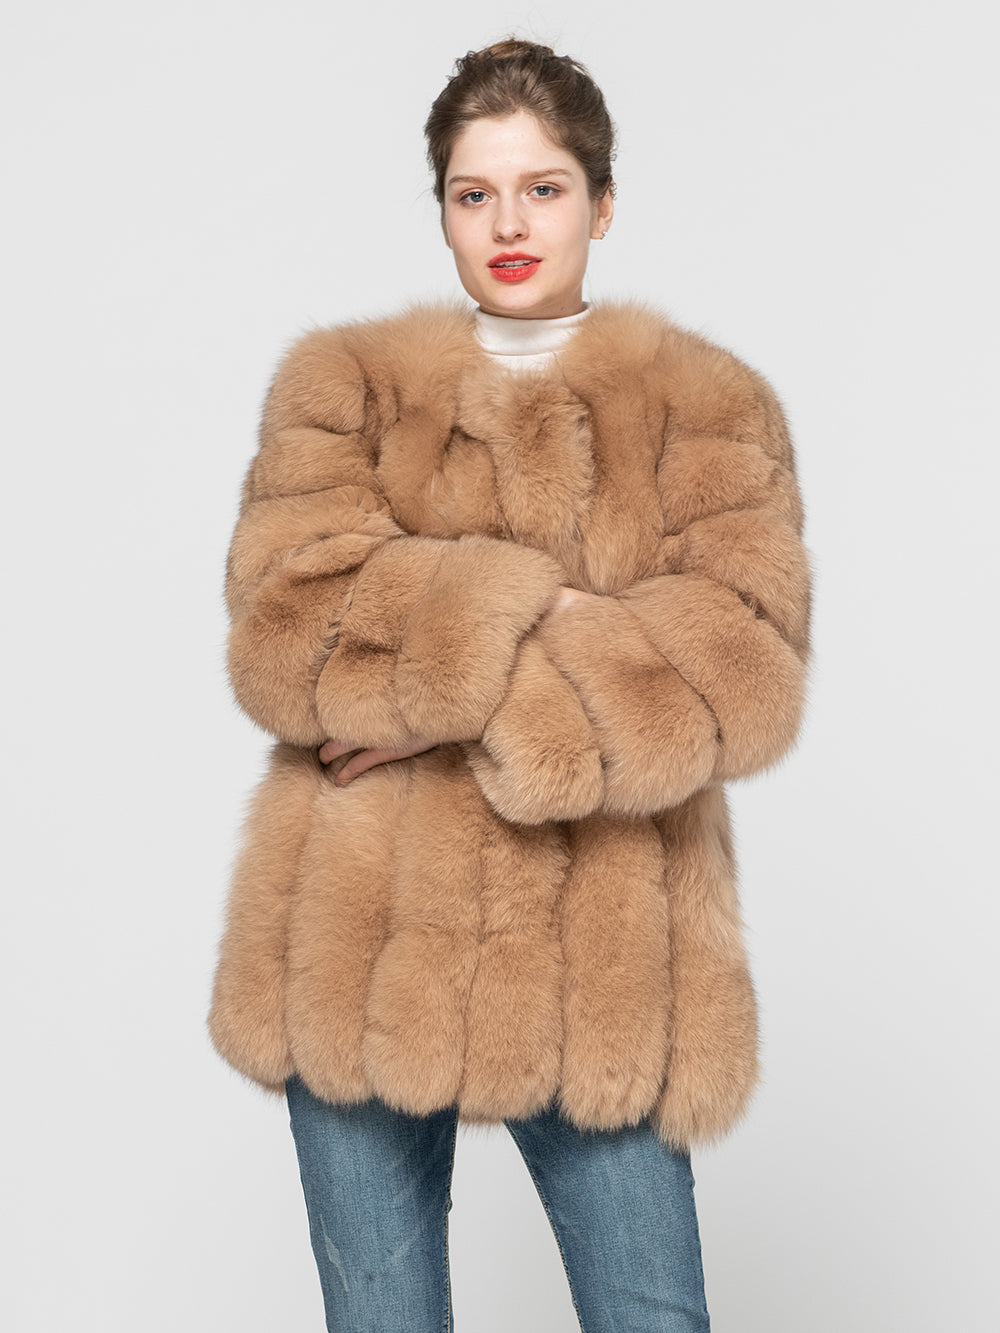 2022 New Women Natural Whole Skin Fox Fur Coat Warm Real Fur Jacket Overcoat